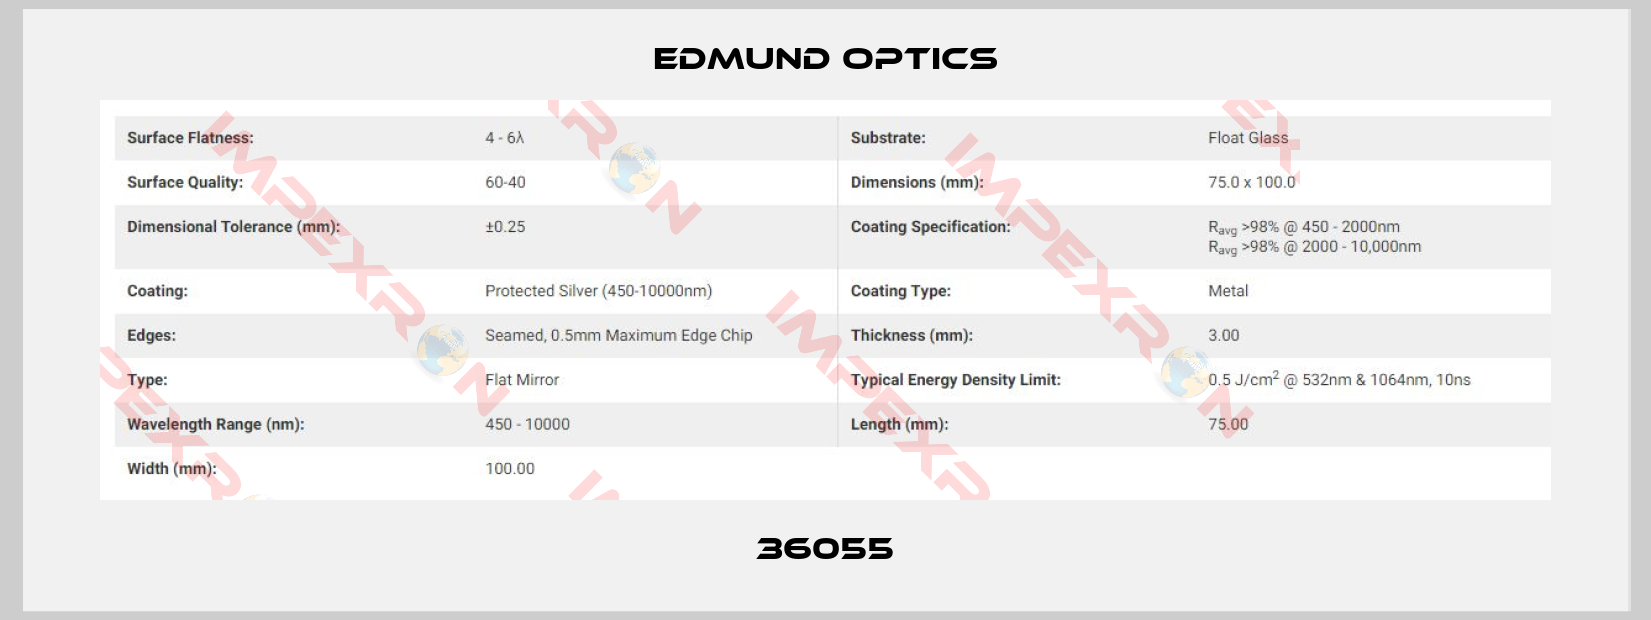 Edmund Optics-36055